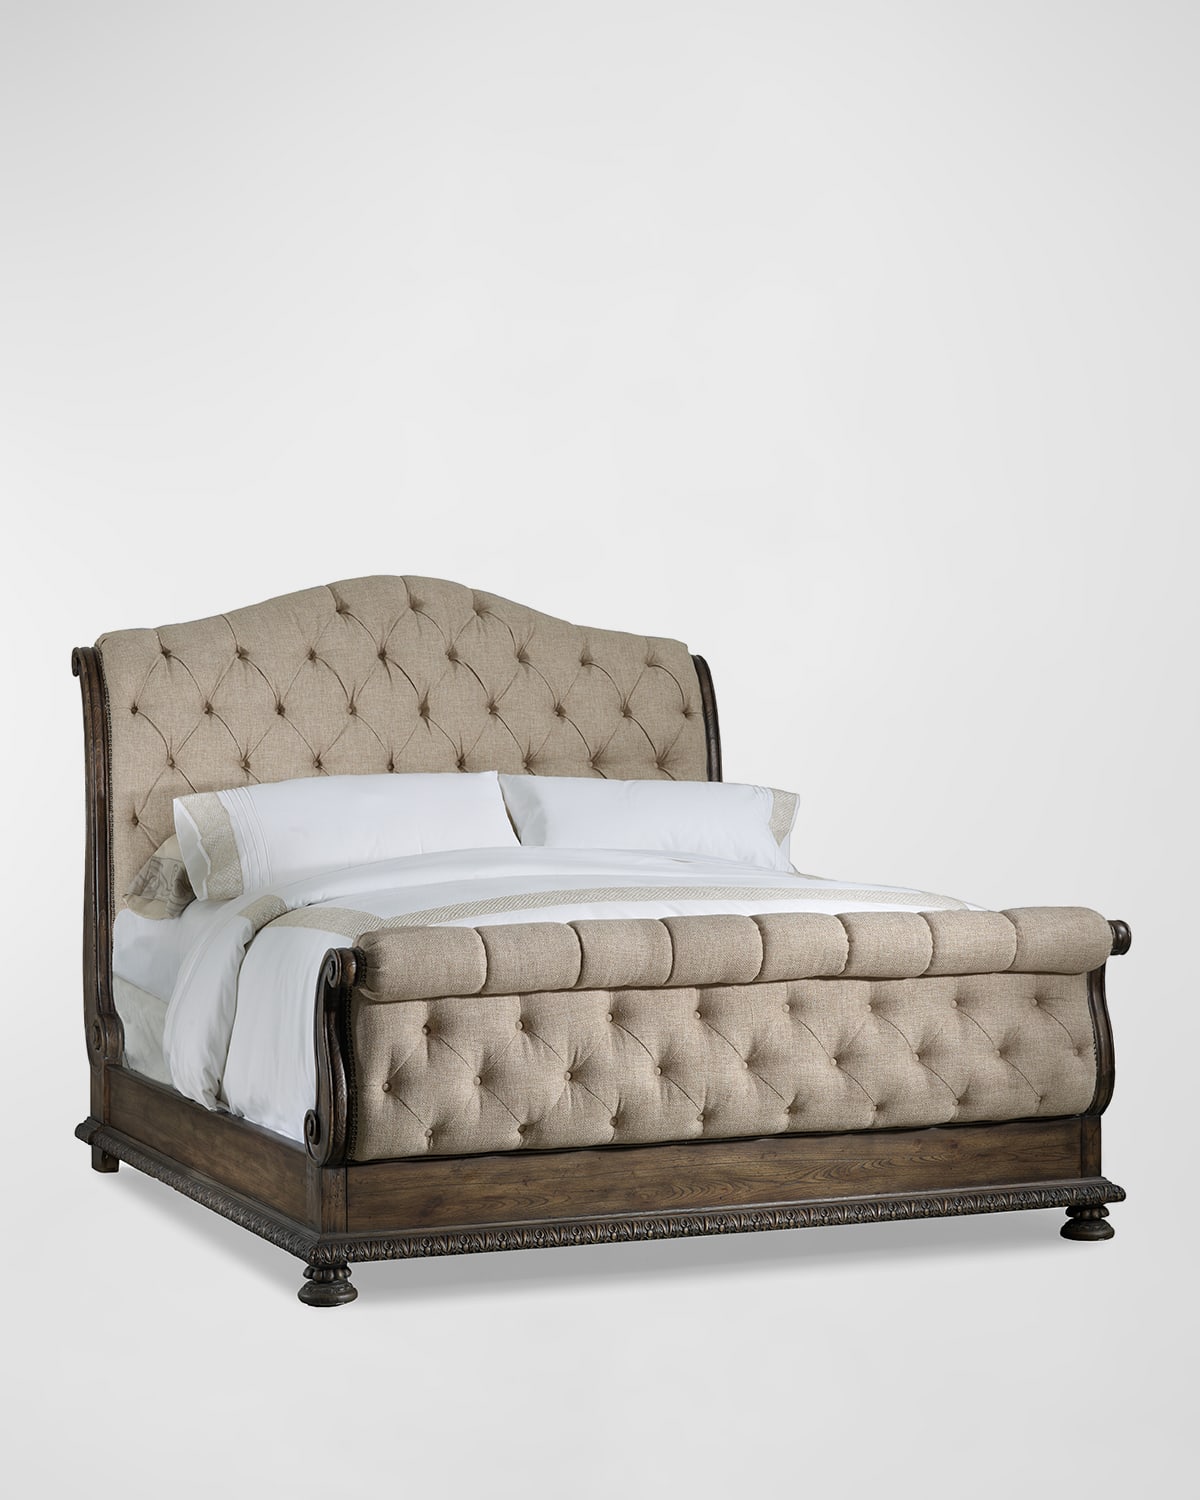 Hooker Furniture Rhapsody Tufted Queen Bed In Ecru